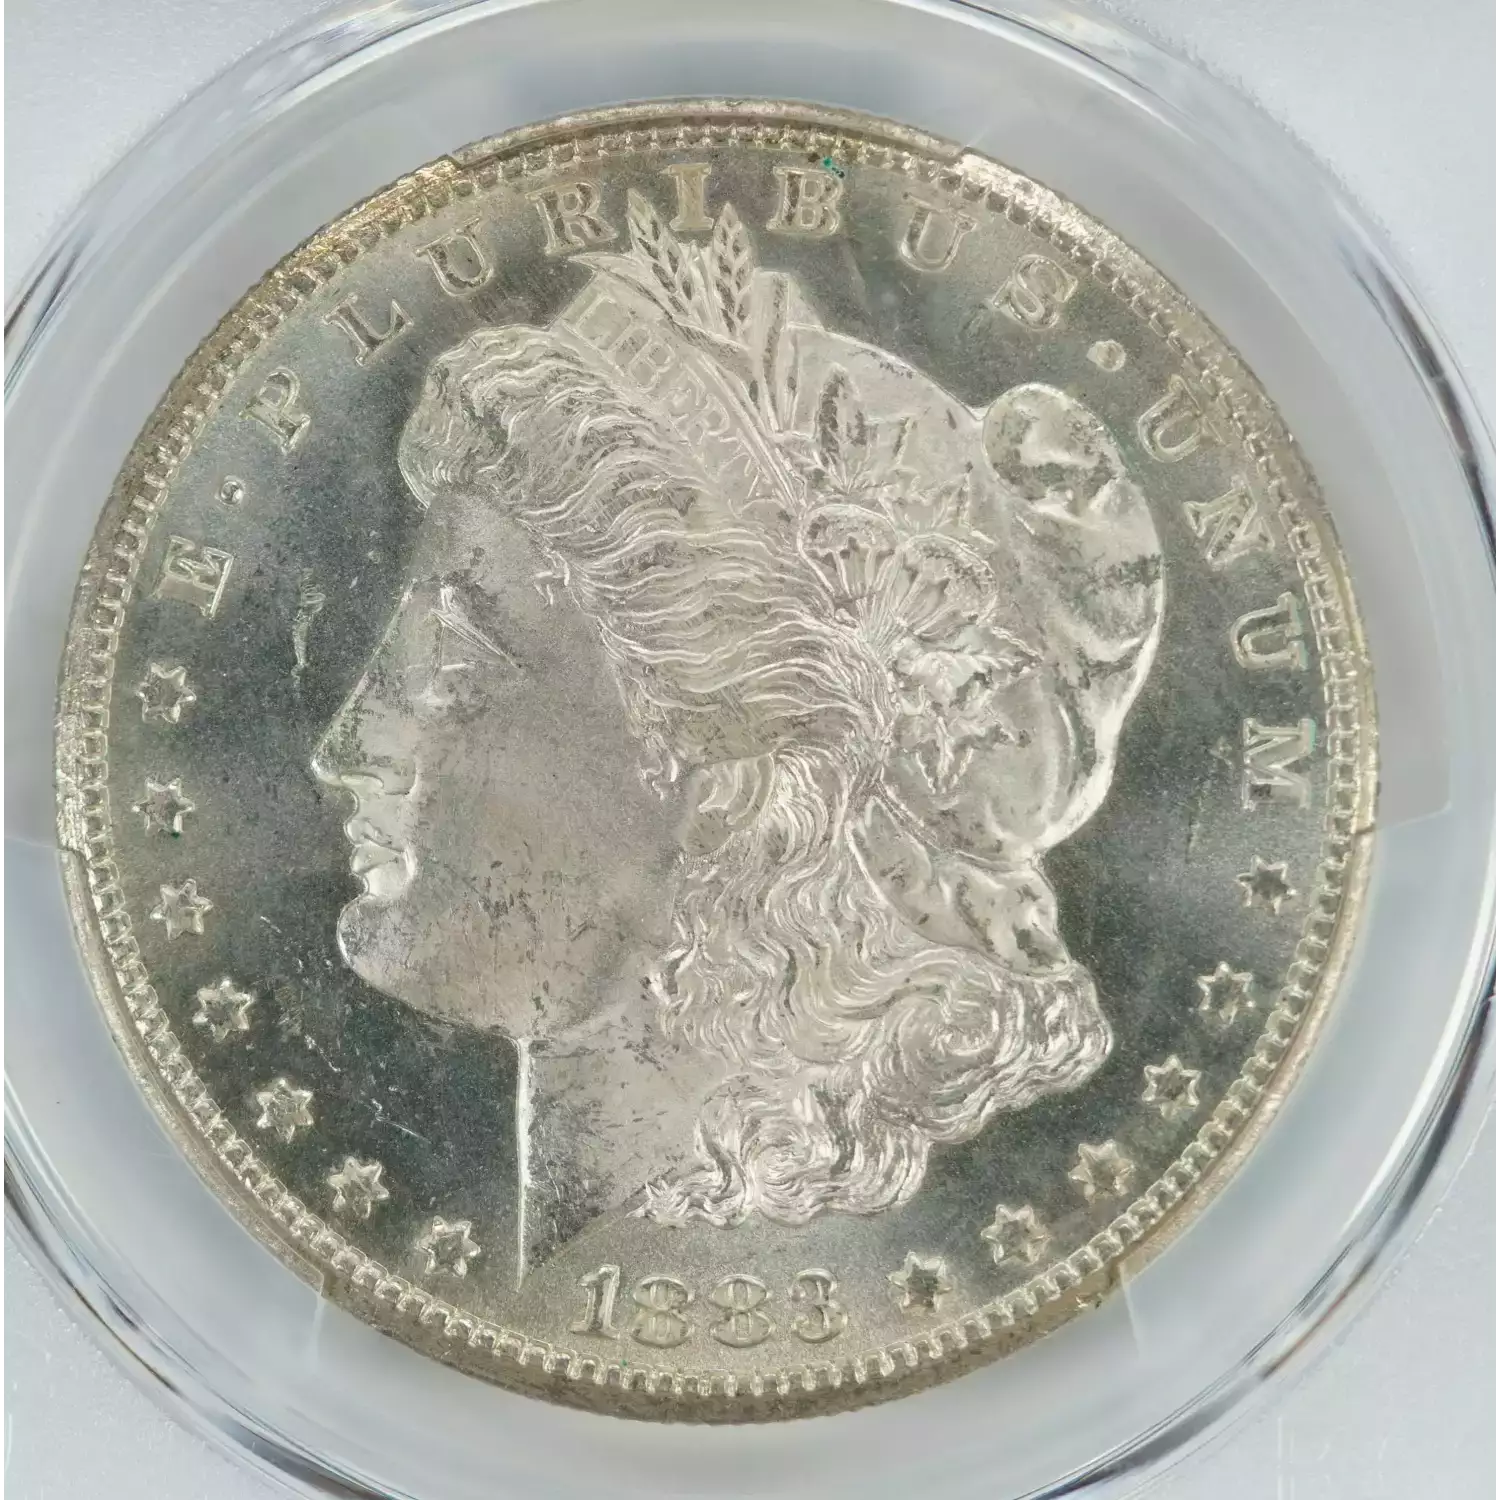 1883-CC $1